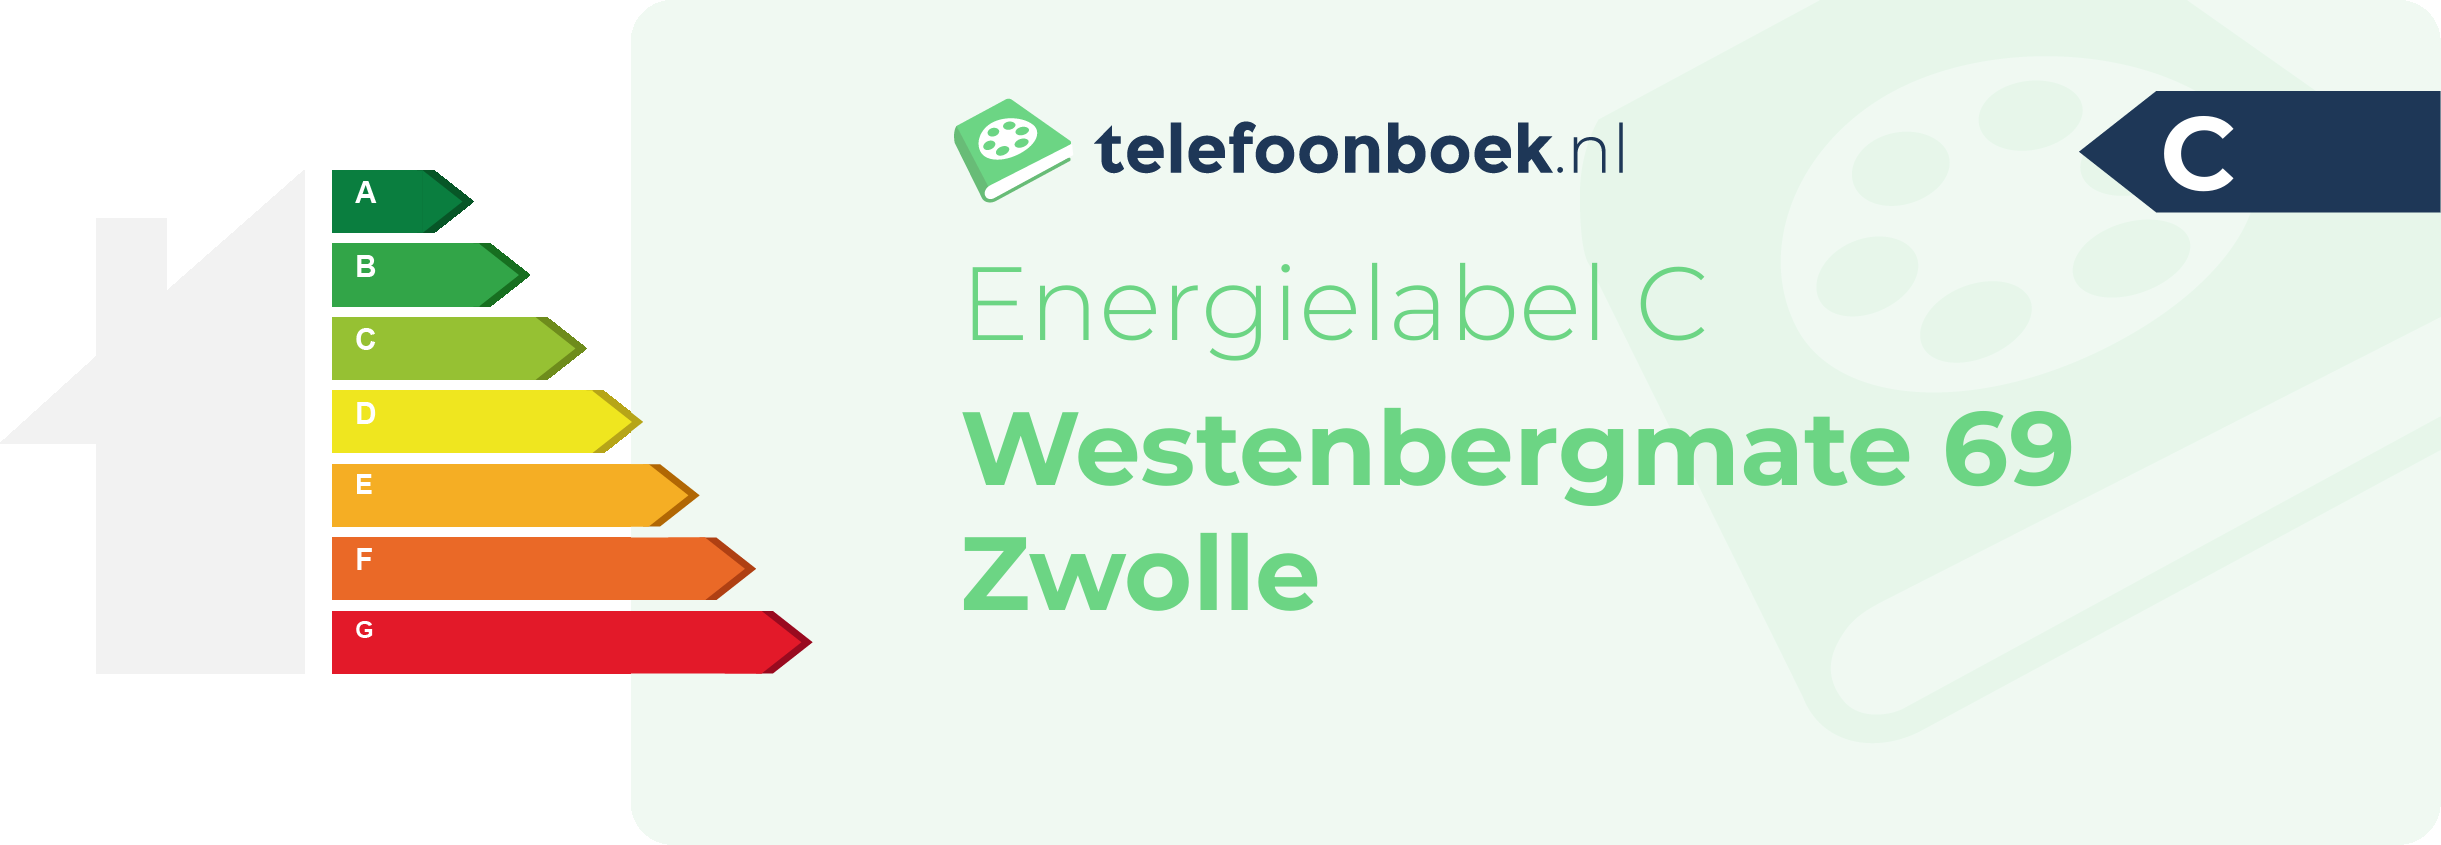 Energielabel Westenbergmate 69 Zwolle